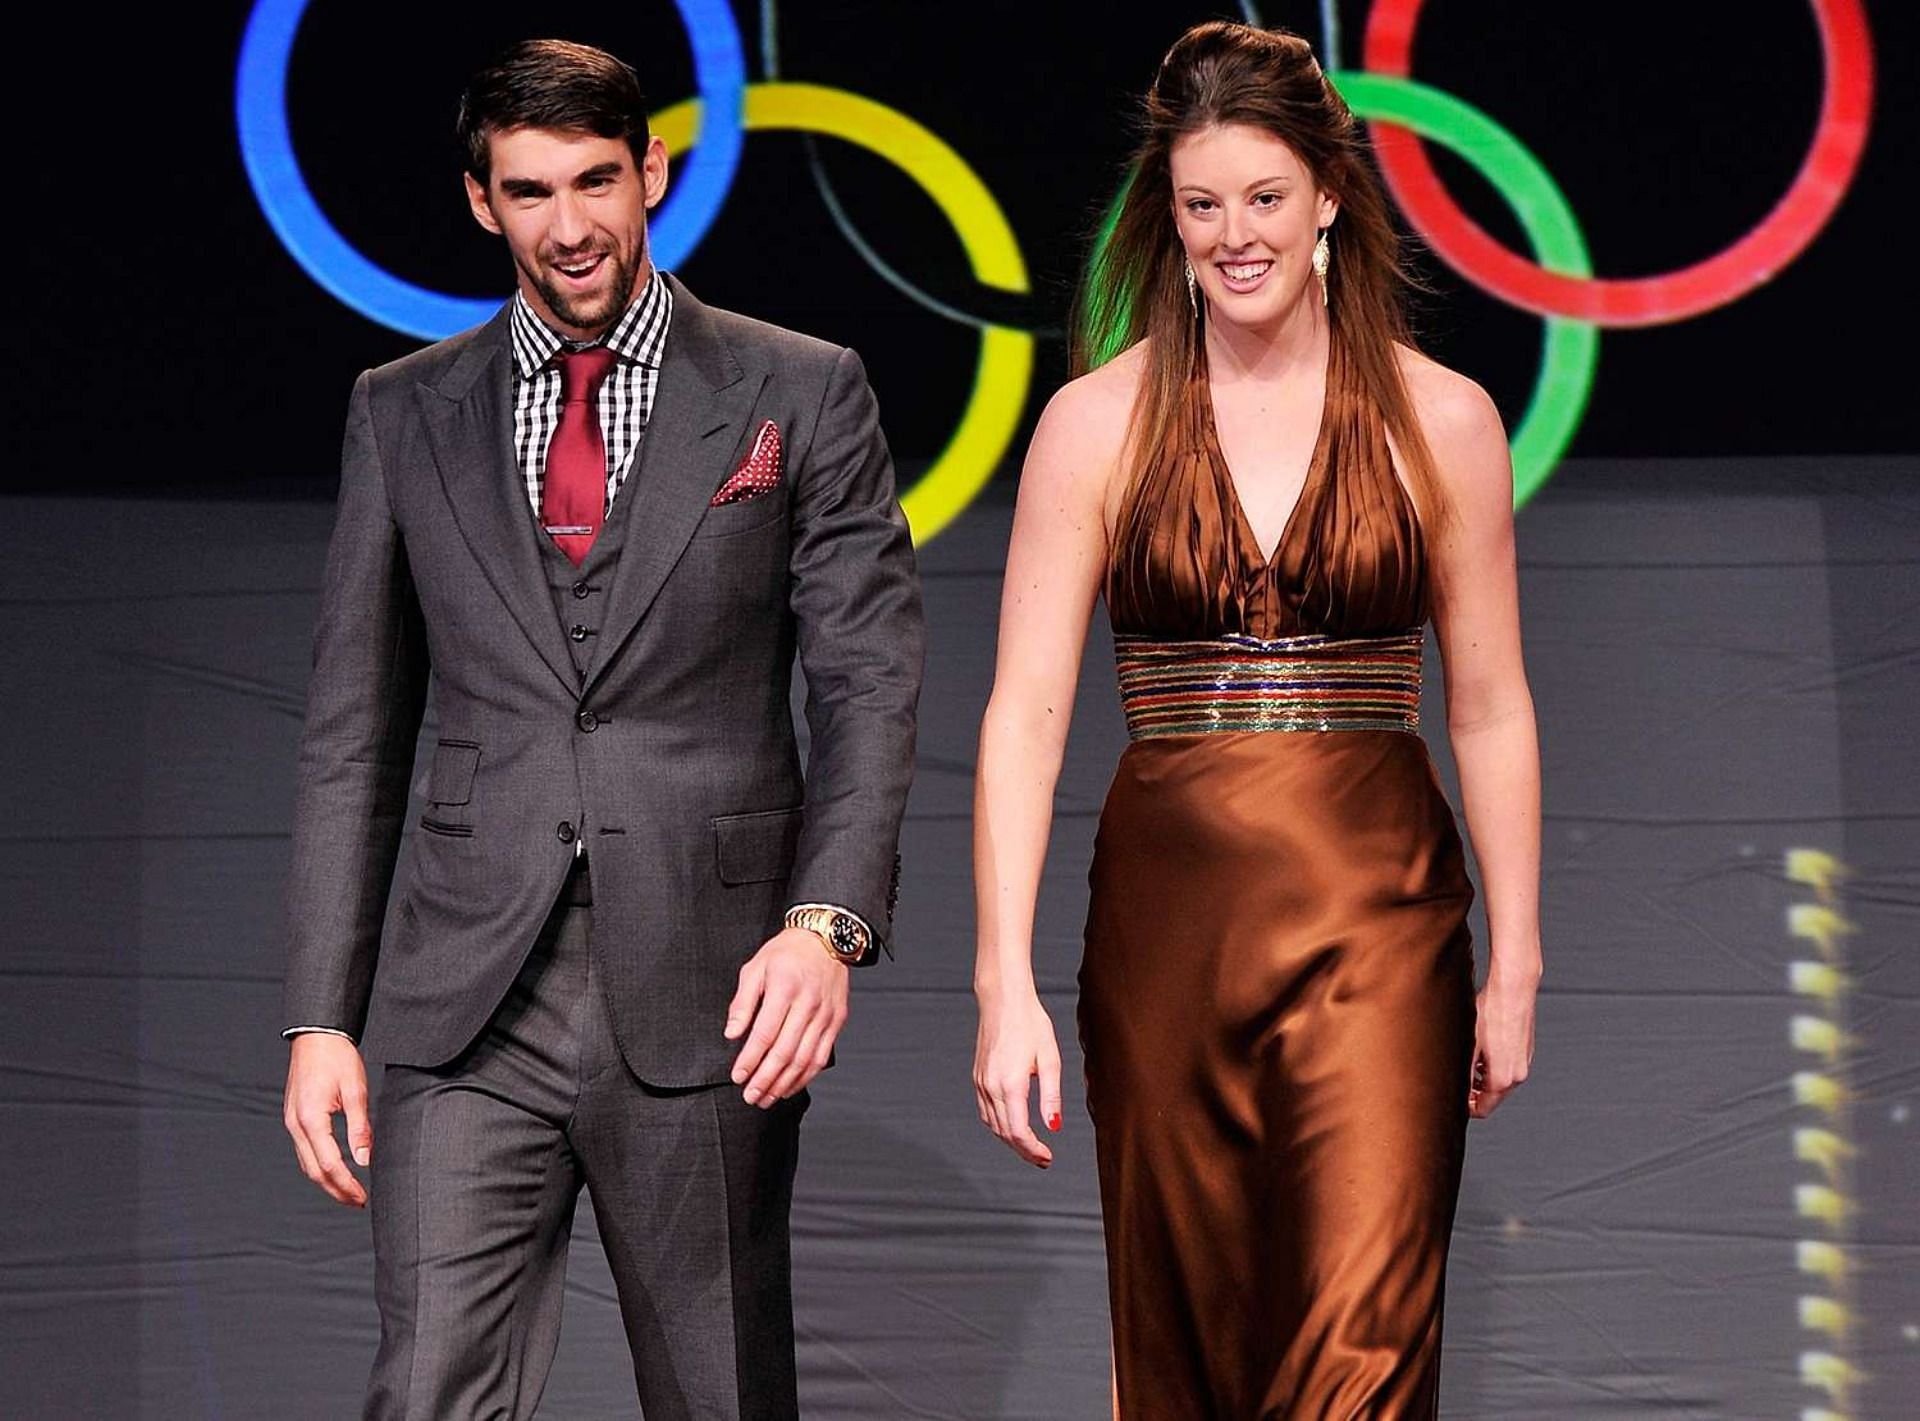 Michael Phelps and Allison Schmitt (Image via People)